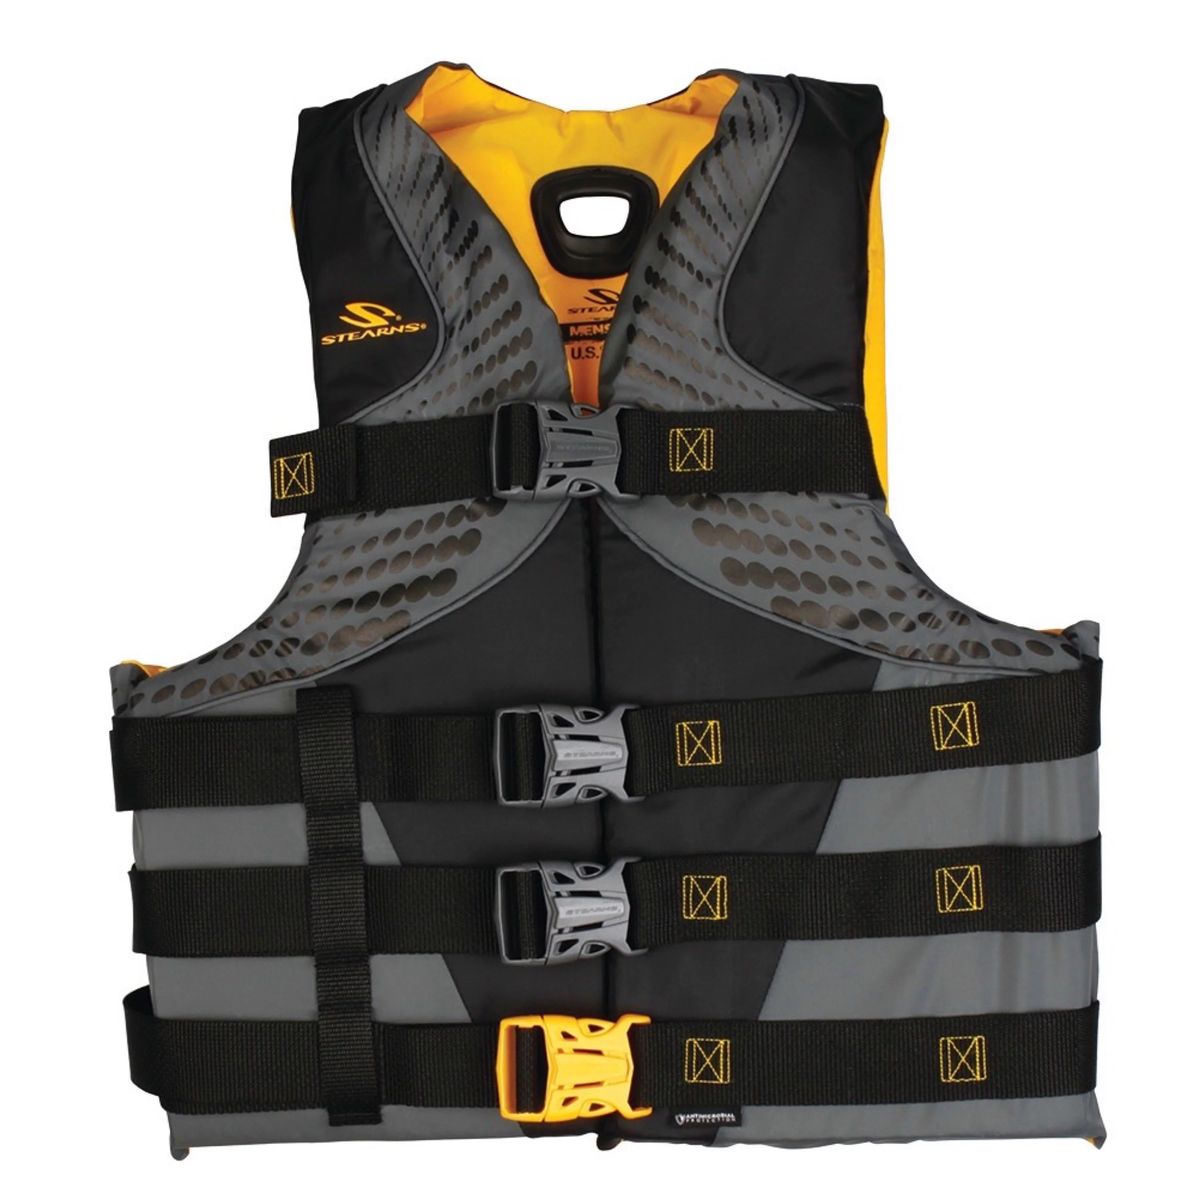 [RDY] [送料無料] Stearns インフィニティシリーズ ナイロン抗菌ライフベスト L/XL、イエロー [楽天海外通販] | Stearns Infinity Series Nylon Antimicrobial Life Vest L/XL, Yellow